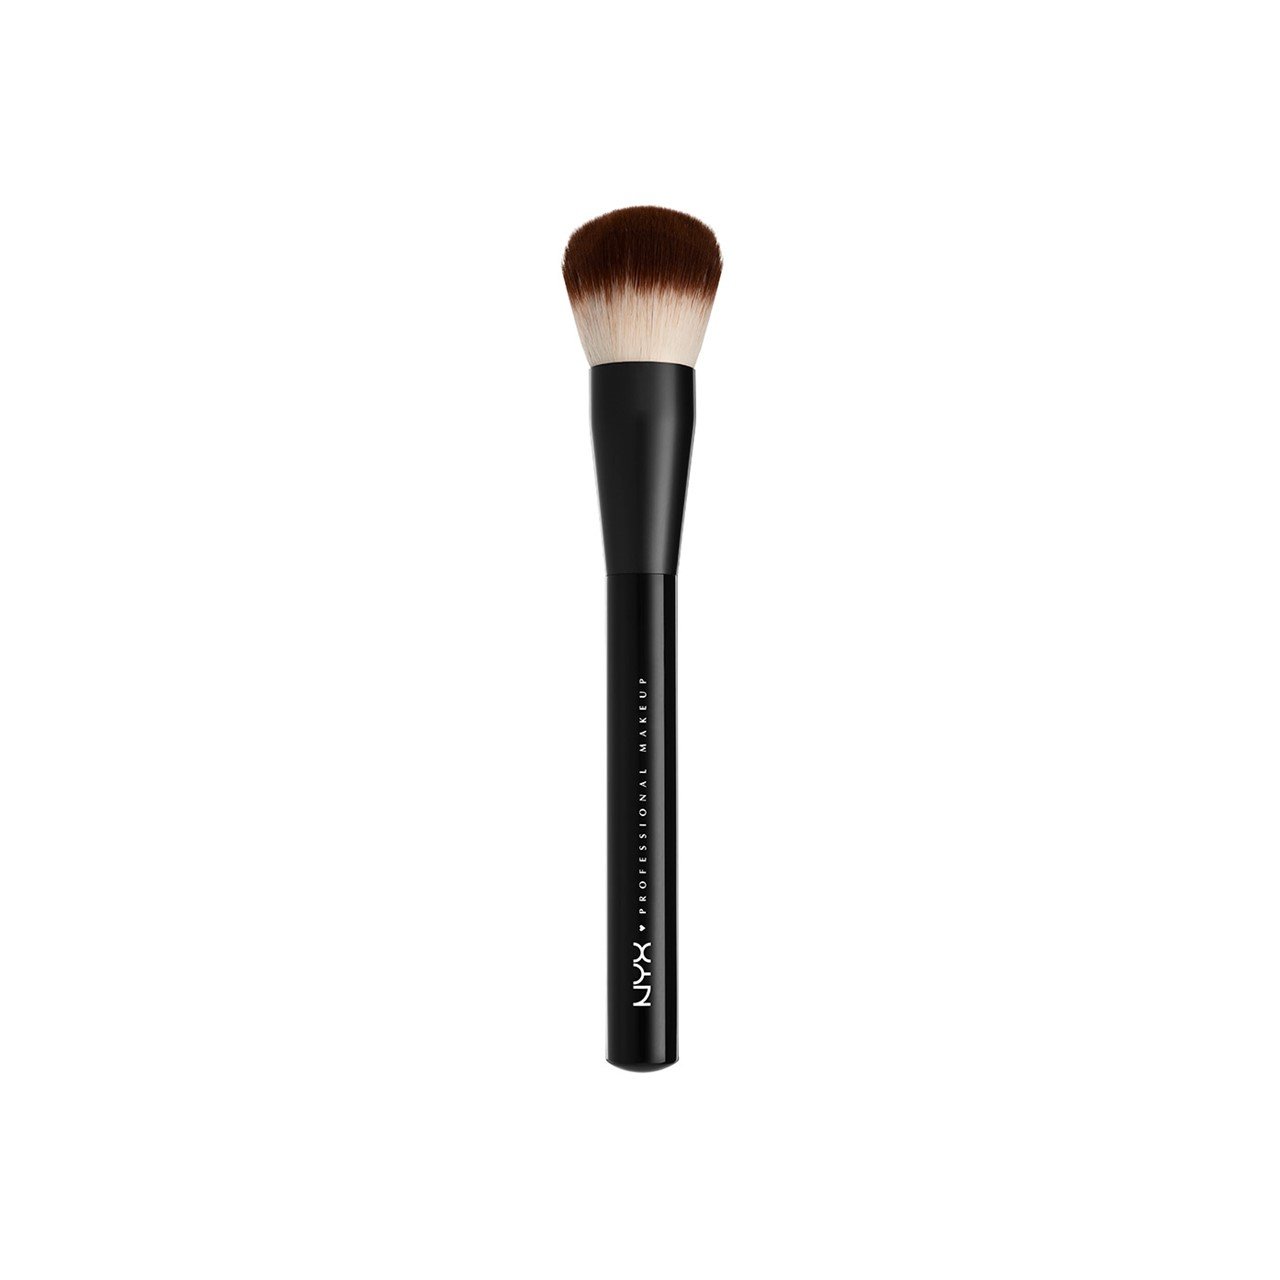 NYX Pro Makeup Pro Multi-Purpose Buffing Brush